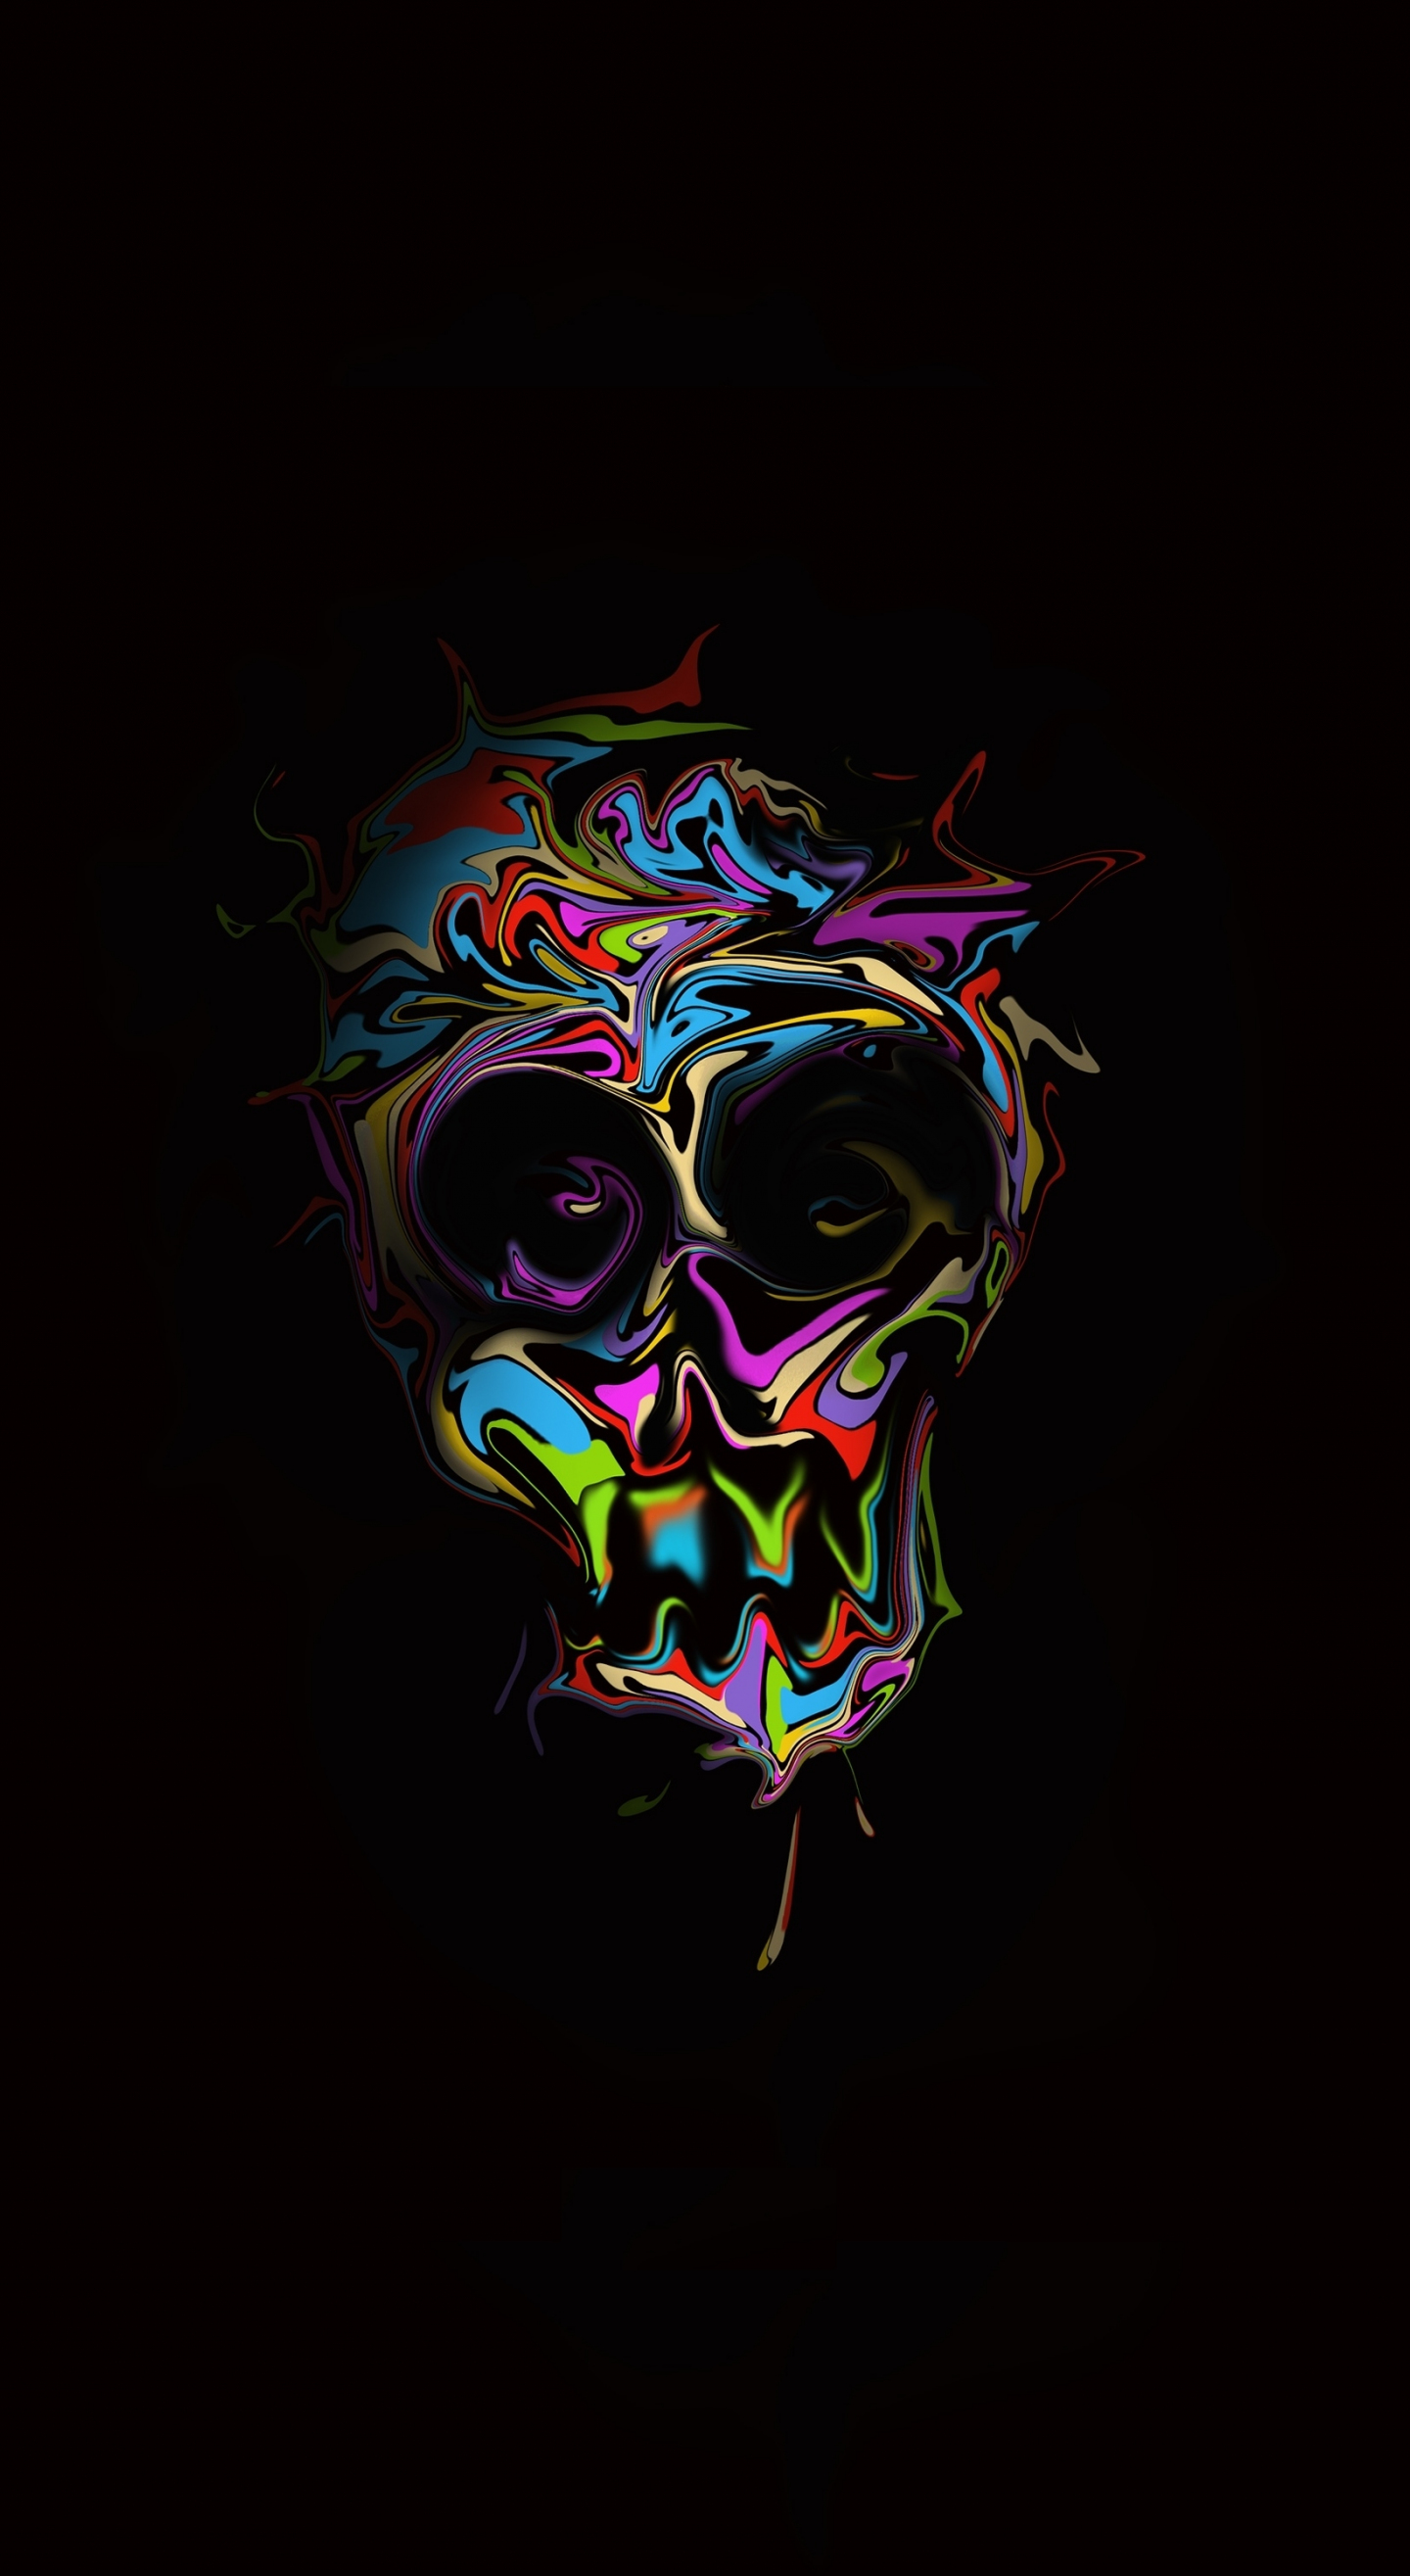 Download wallpaper 1440x2630 glitch, colorful skull, dark, artwork, samsung  galaxy note 8, 1440x2630 hd background, 21923